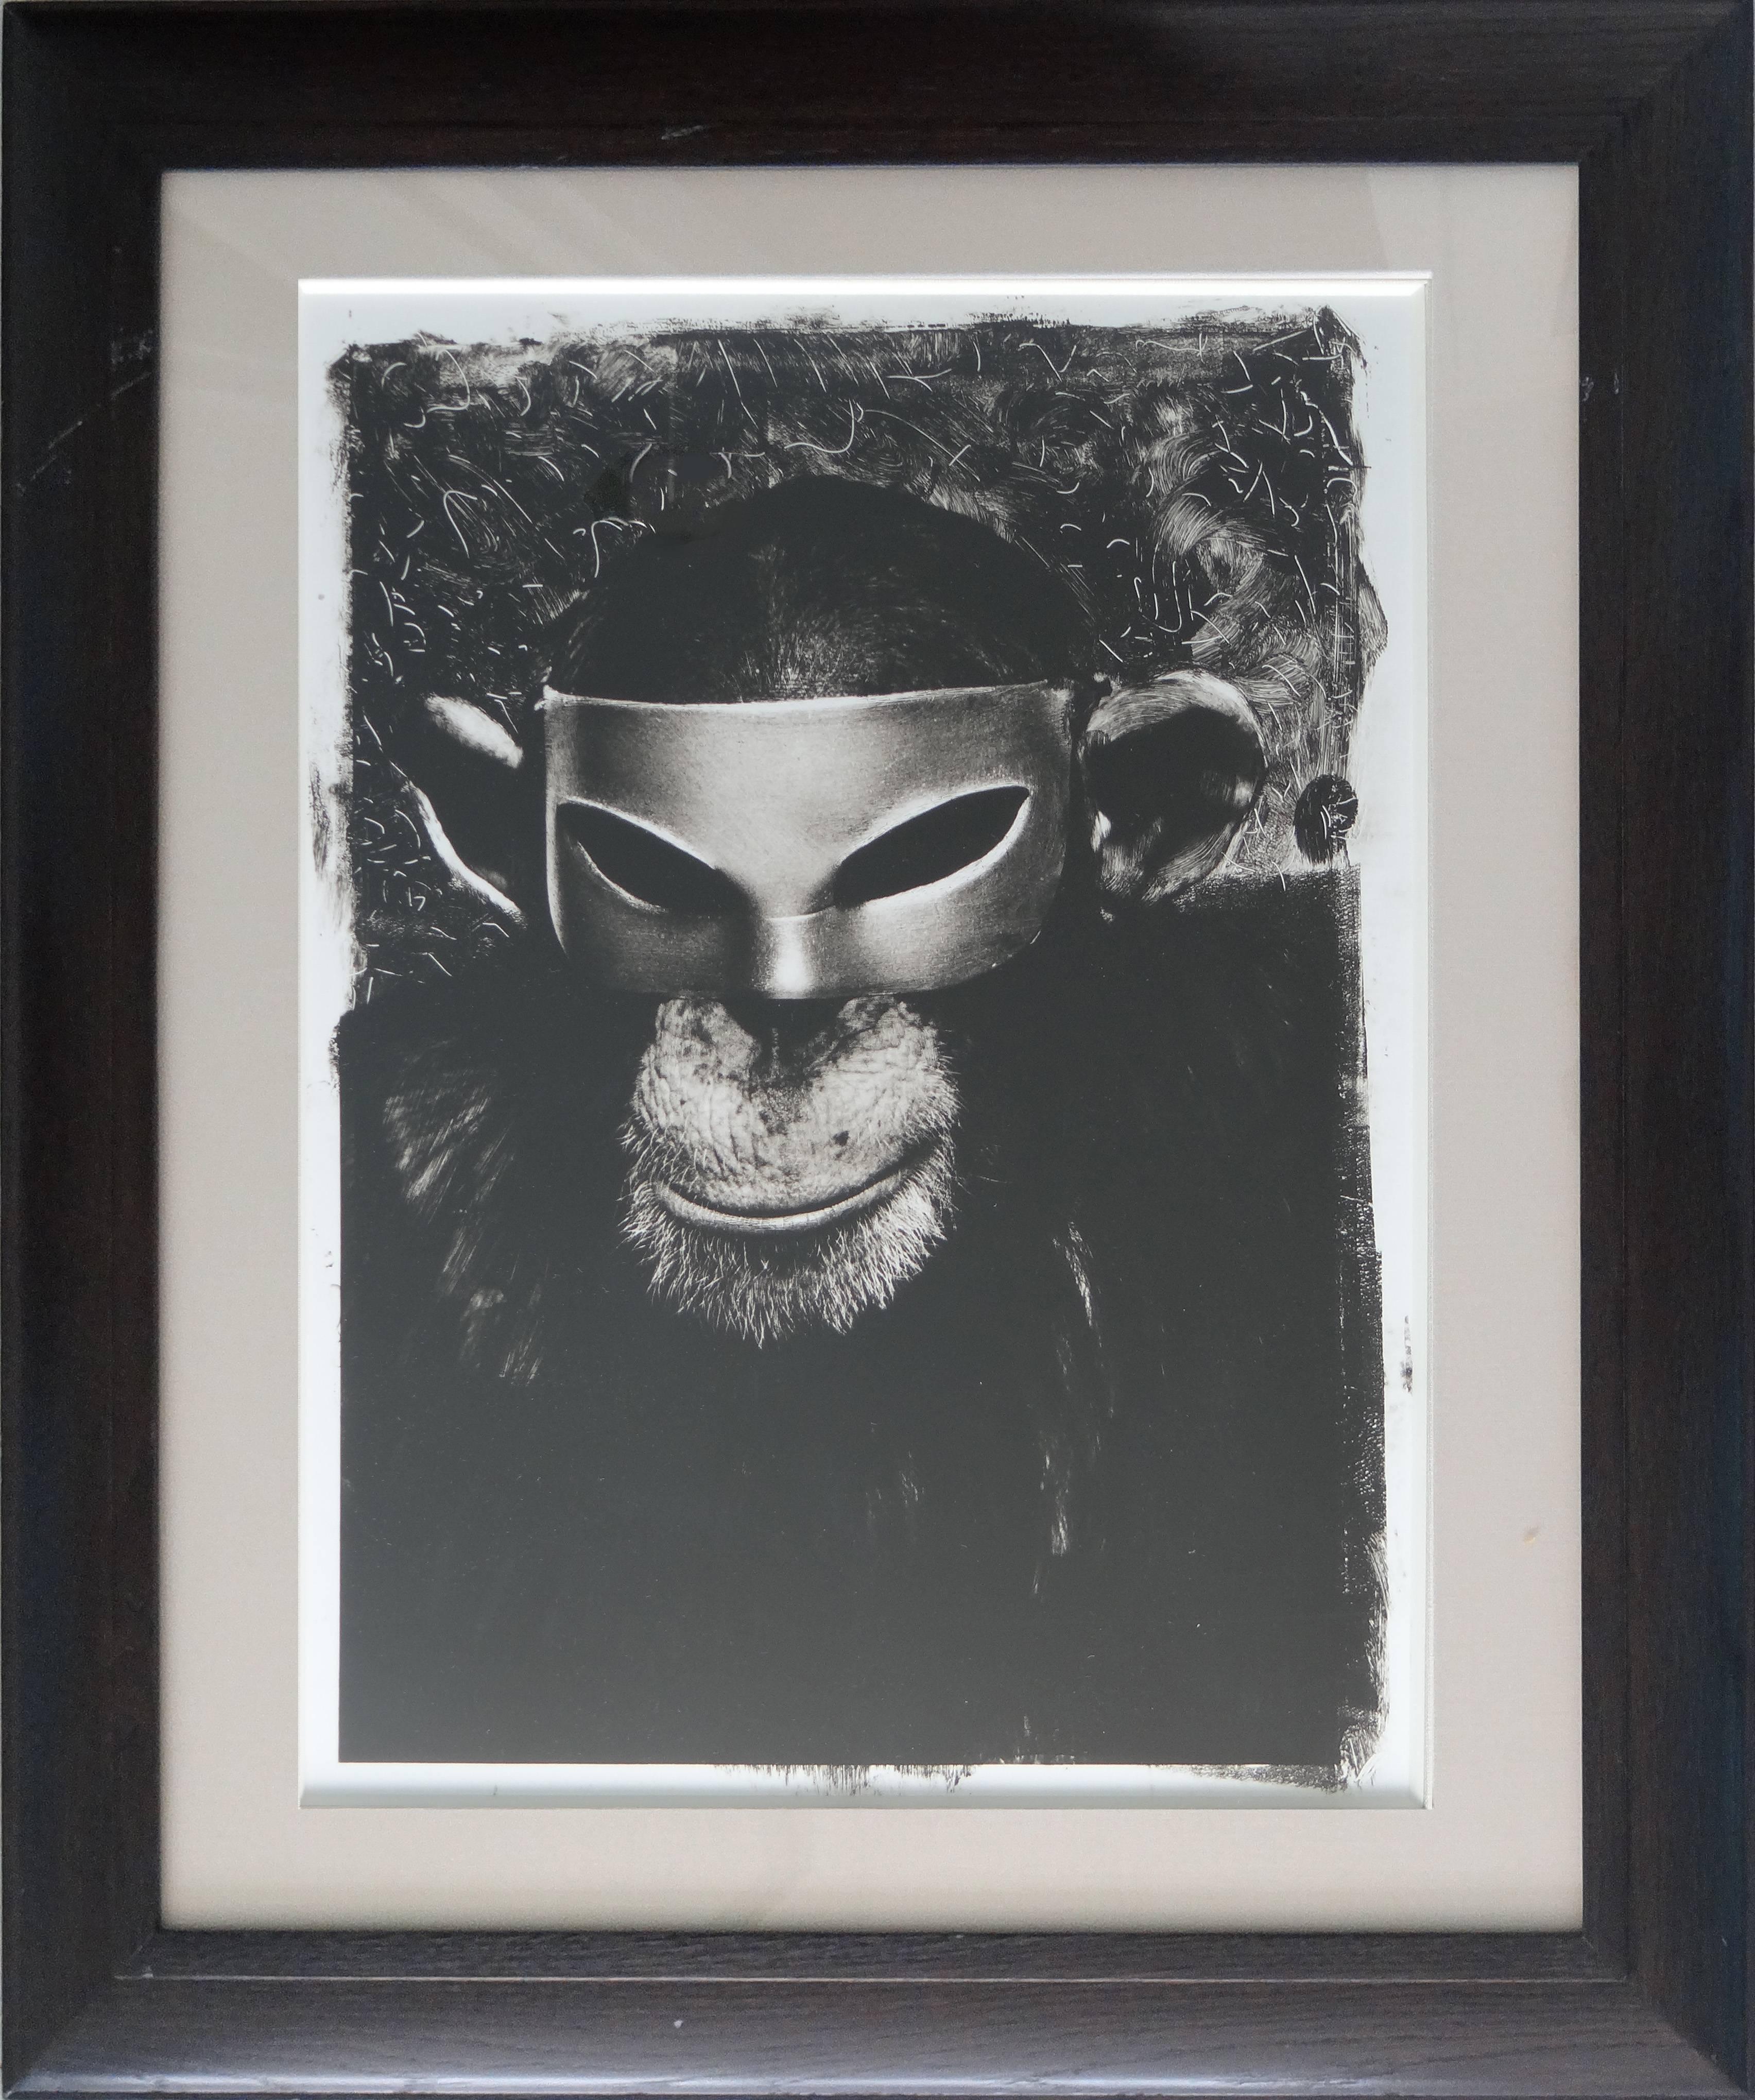 Albert Watson Black and White Photograph - "Monkey with Mask, New York City, 1992", Gelatin Silver Print